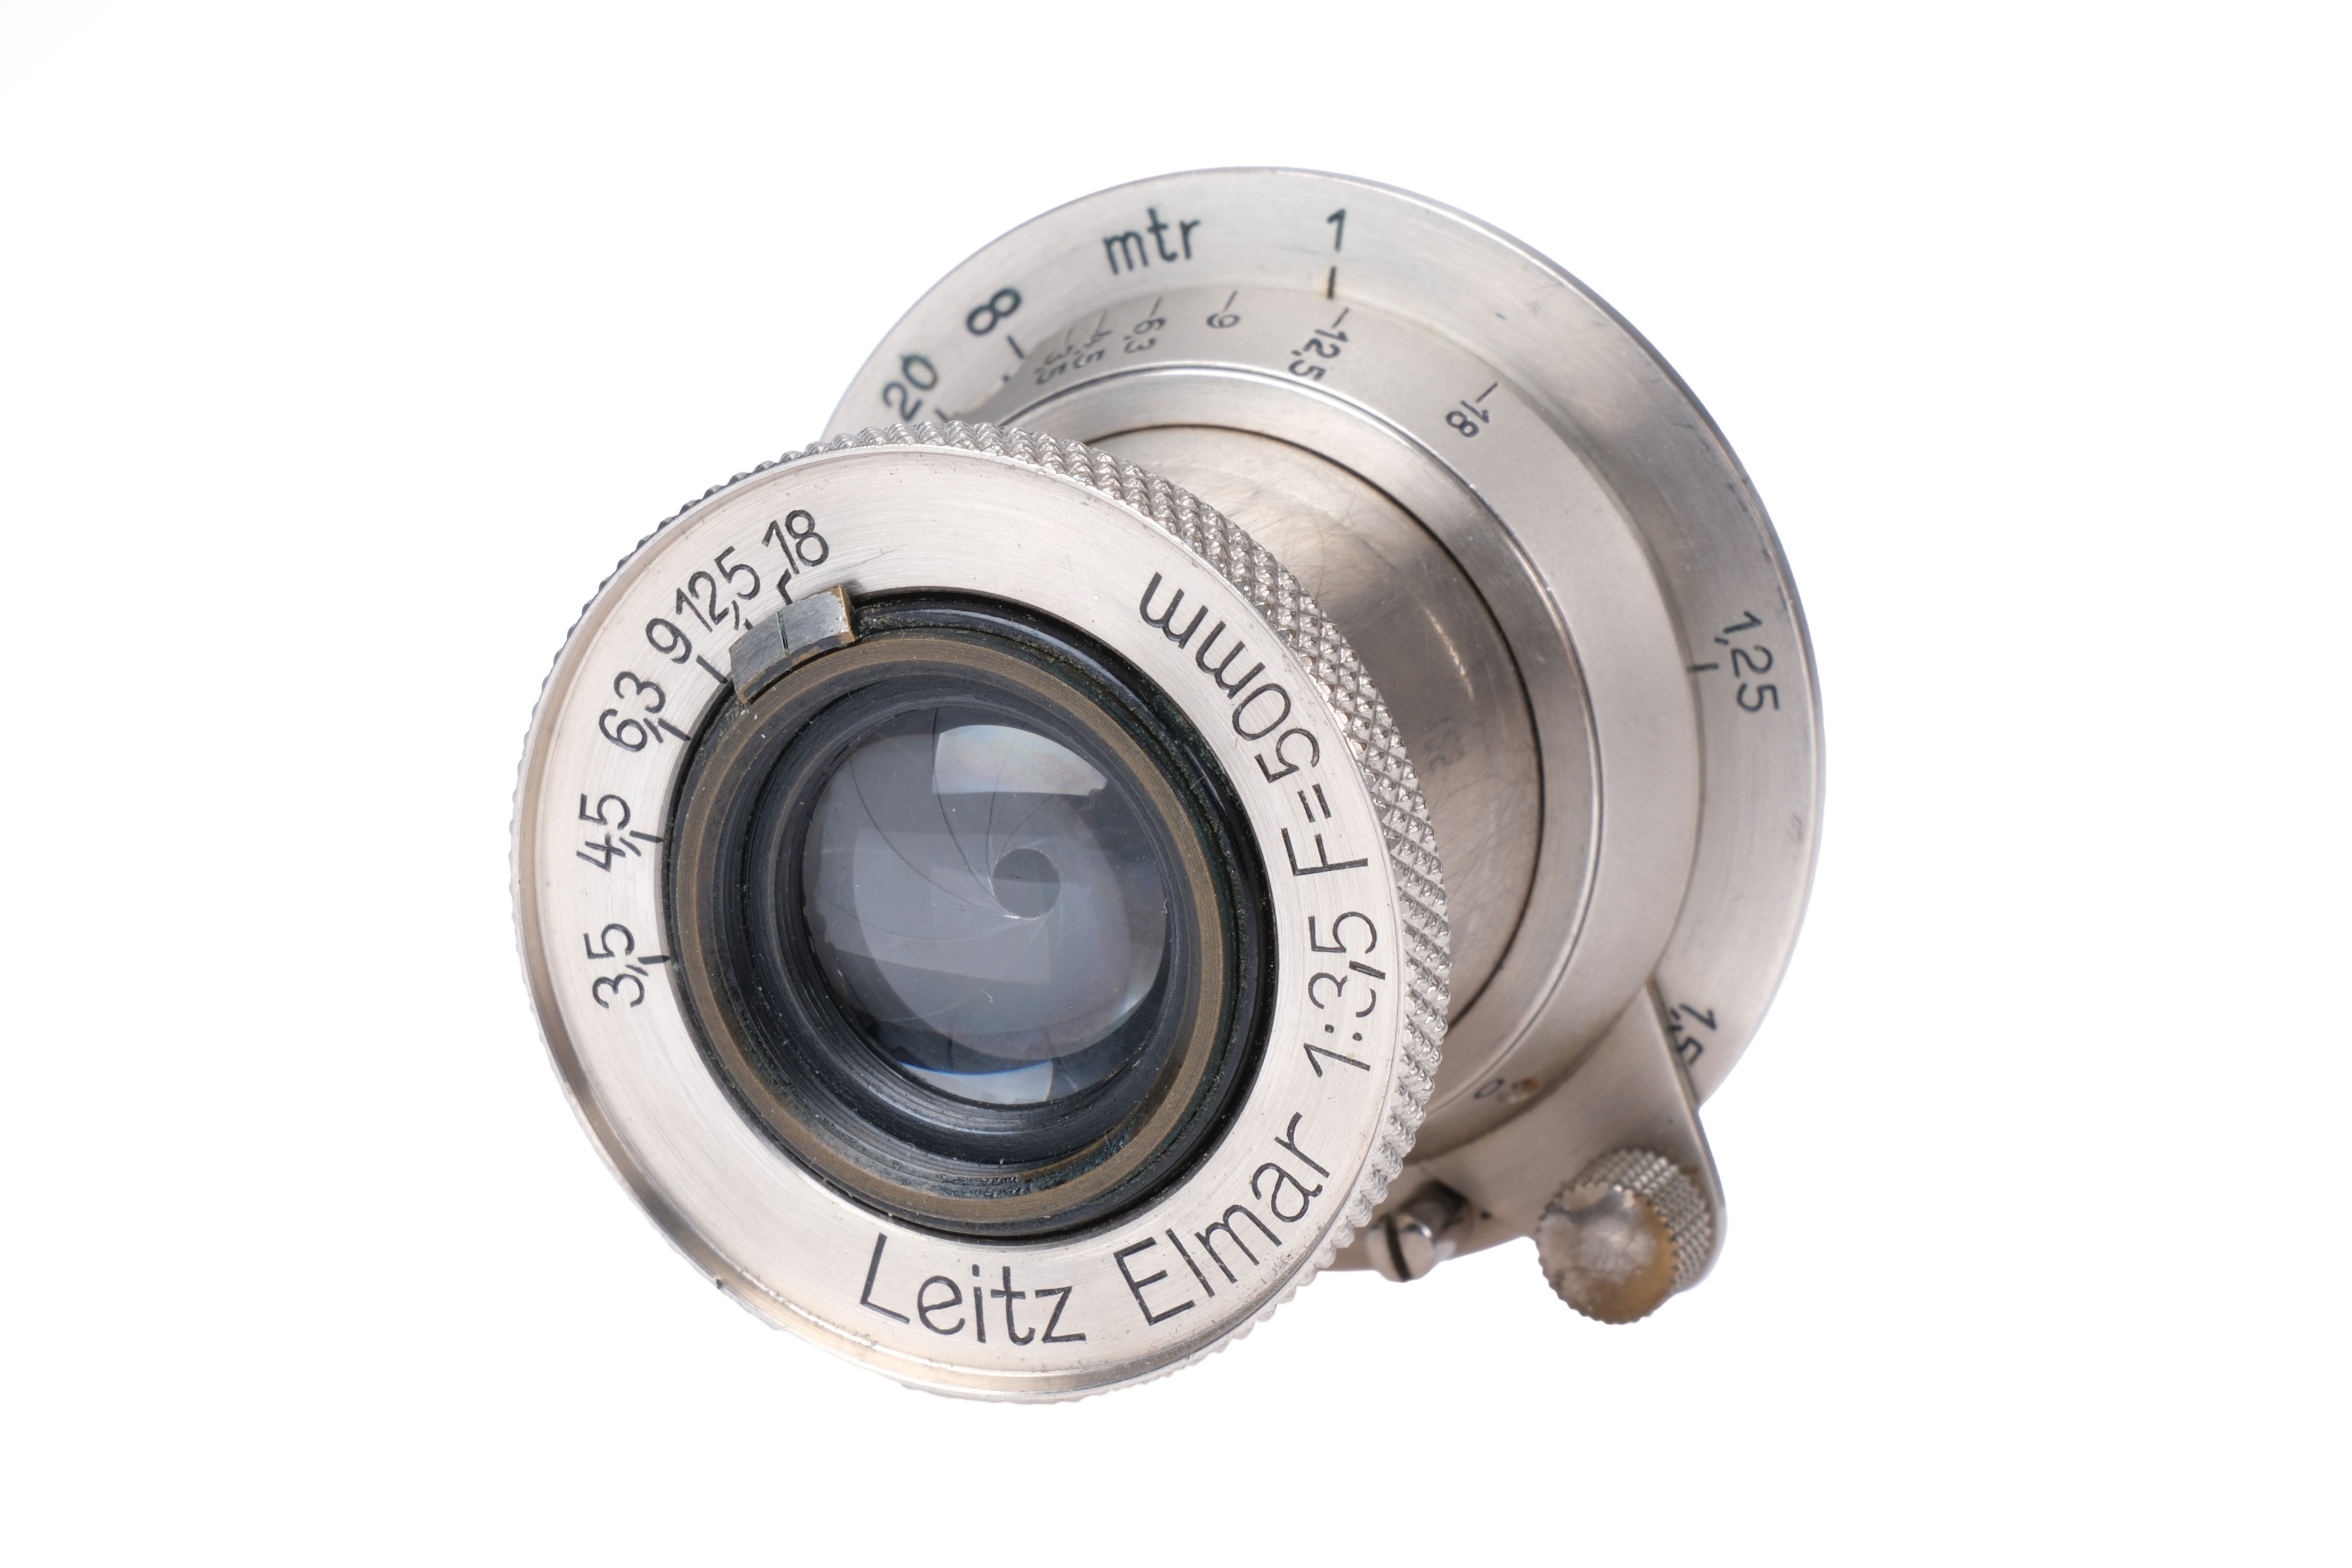 A Leitz Elmar f/3.5 50mm Lens, - Image 2 of 4